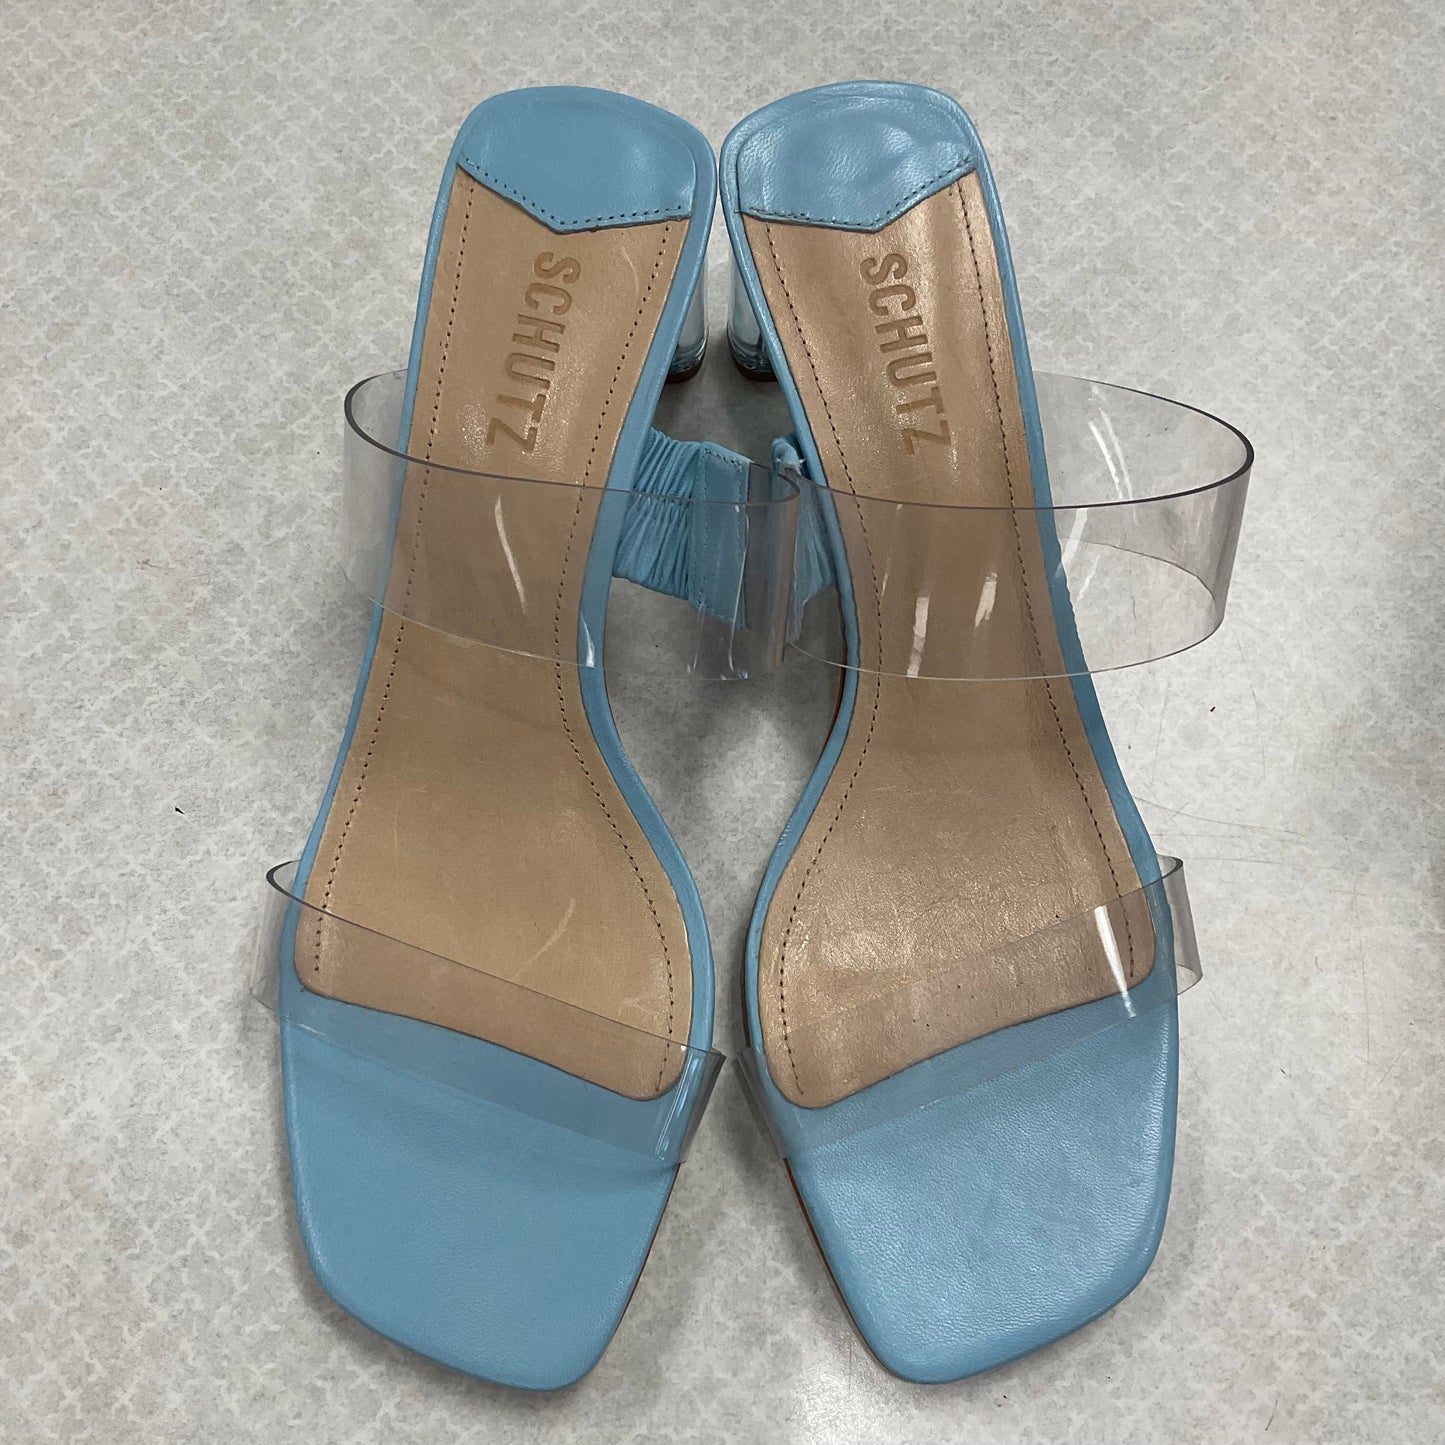 Blue Sandals Heels Block schutz, Size 8.5